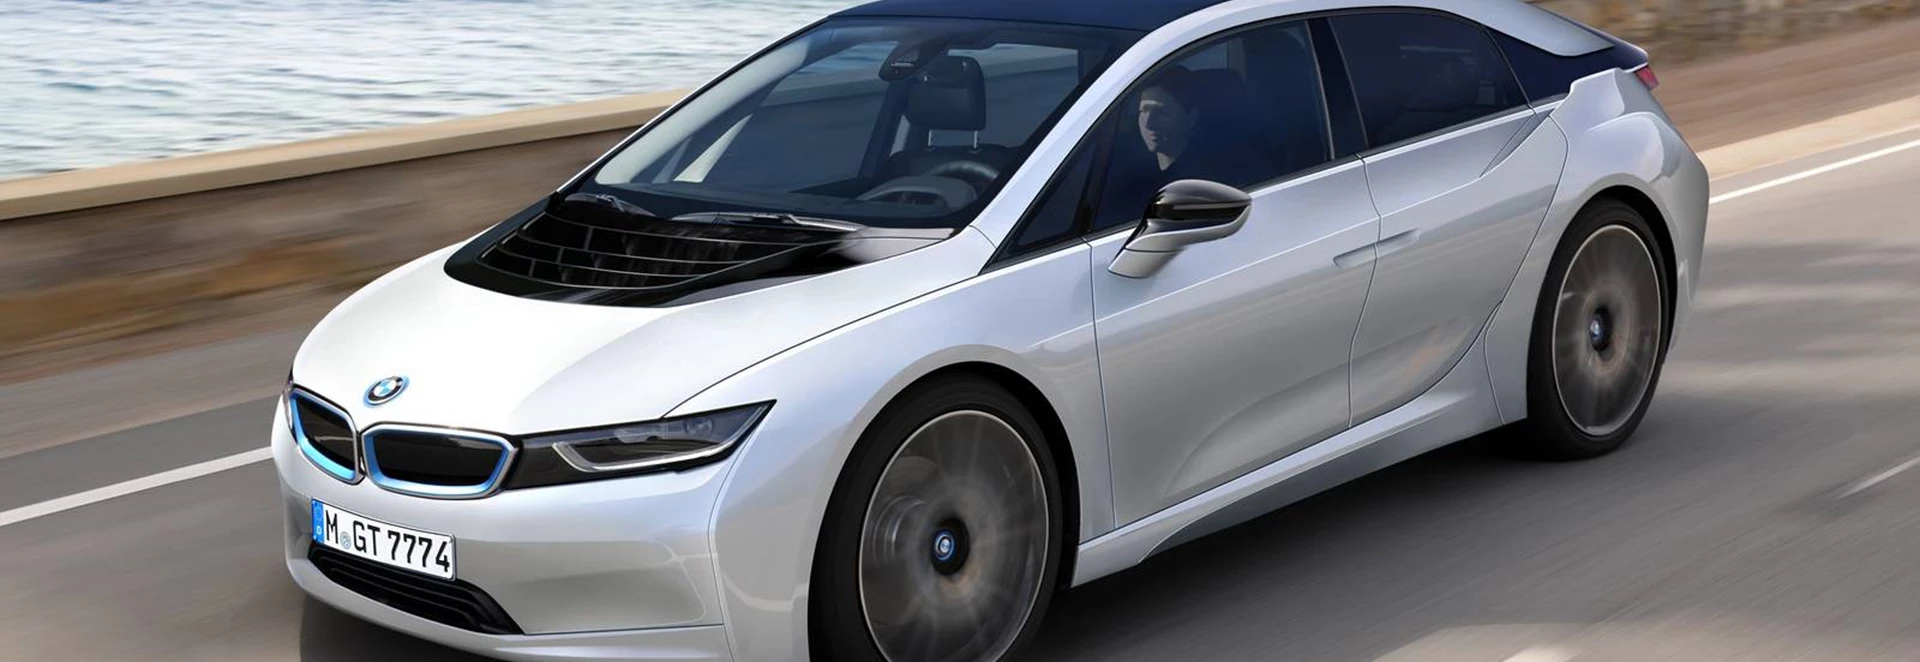 BMW i5 rumours new electric model on the way? Car Keys